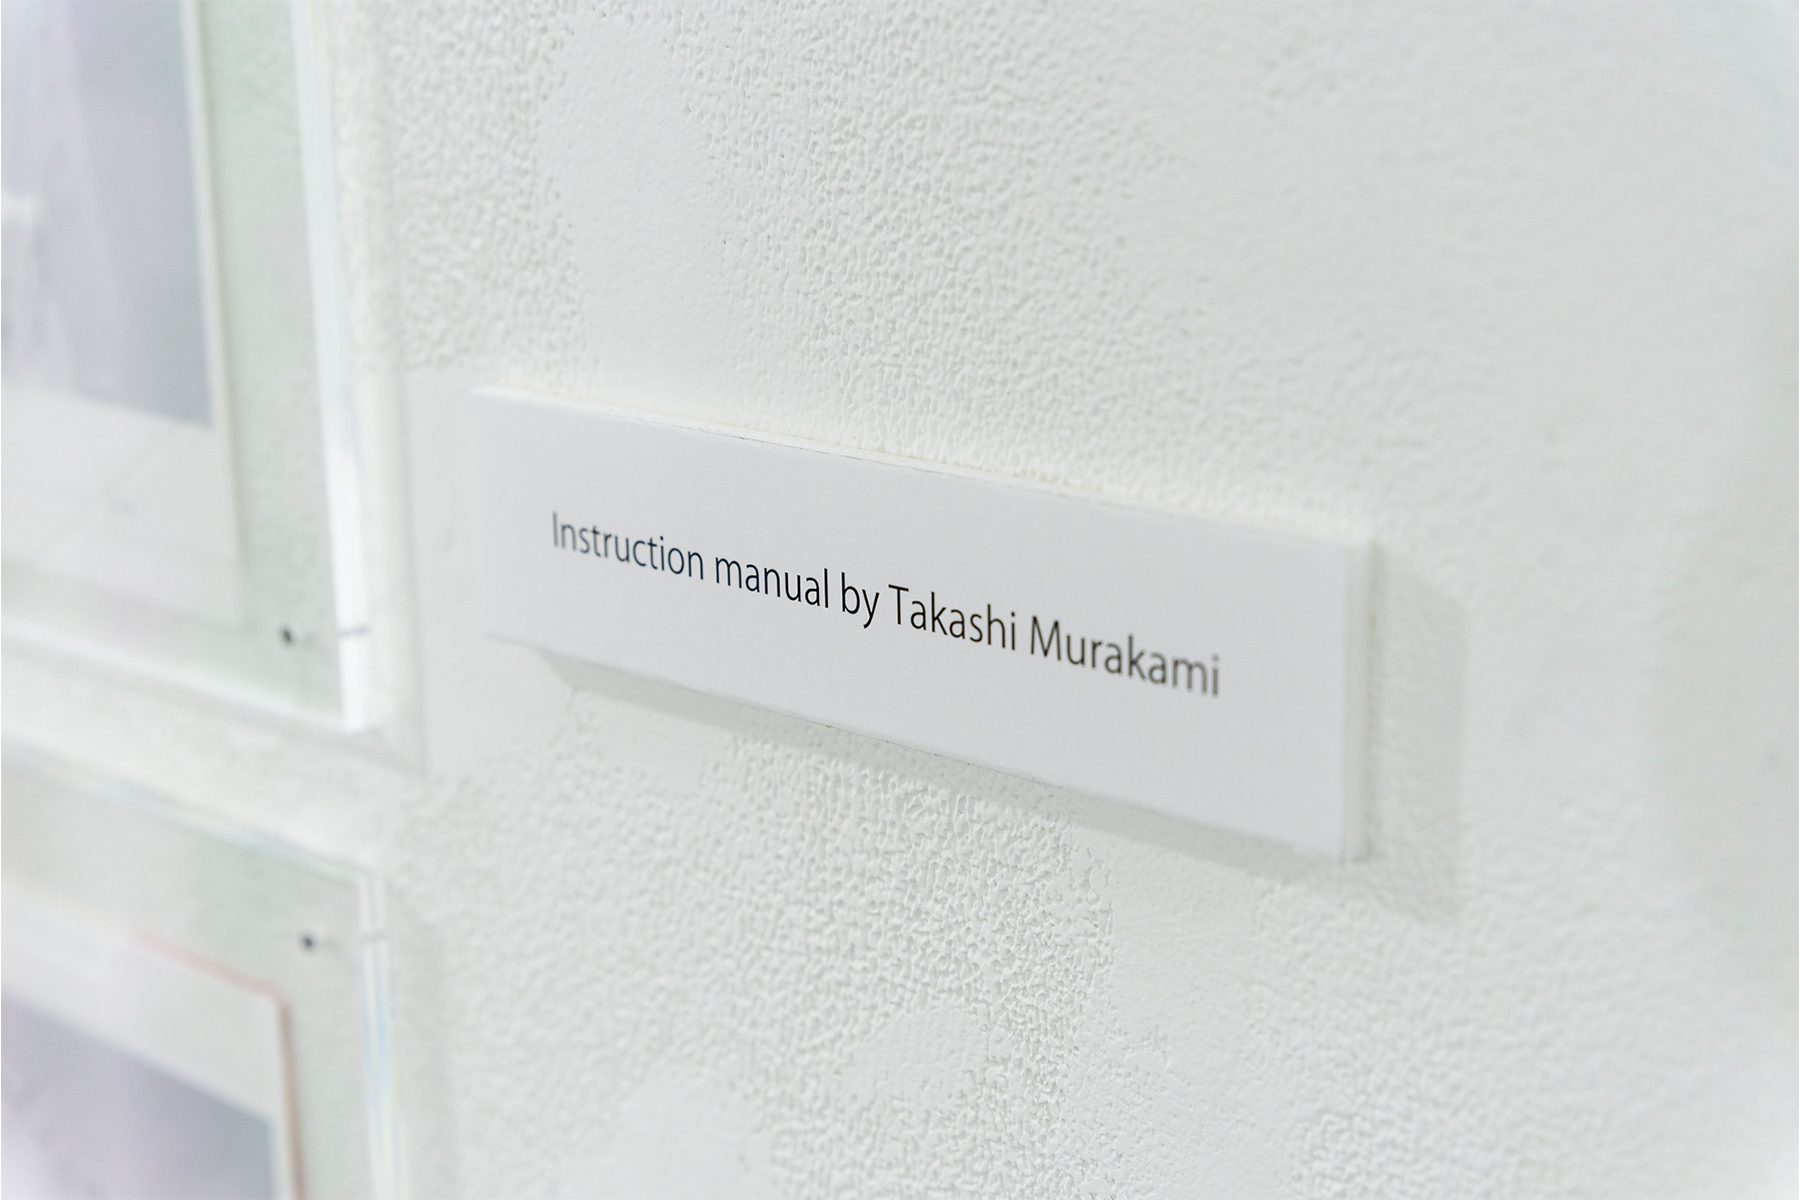 billie-eilish-takashi-murakami-collaboration-exhibition-look-inside-29.jpg